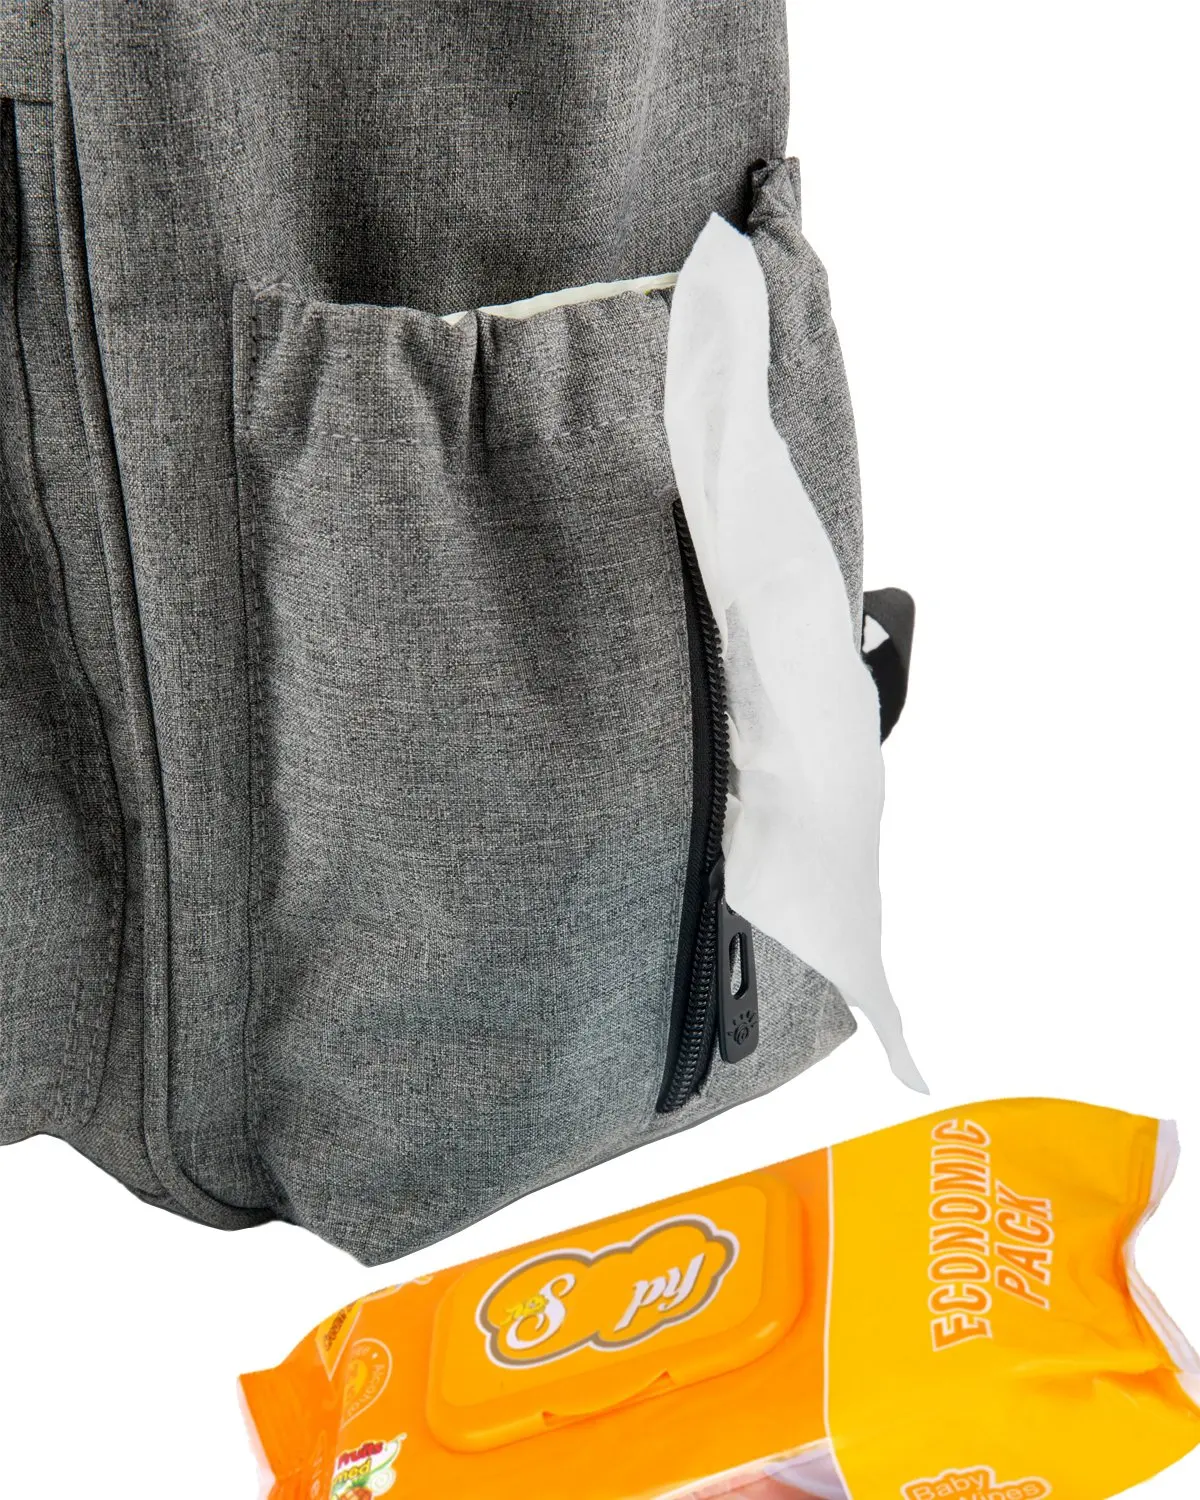 Multifunctional durable baby diaper bag backpack with stroller shoulder strap